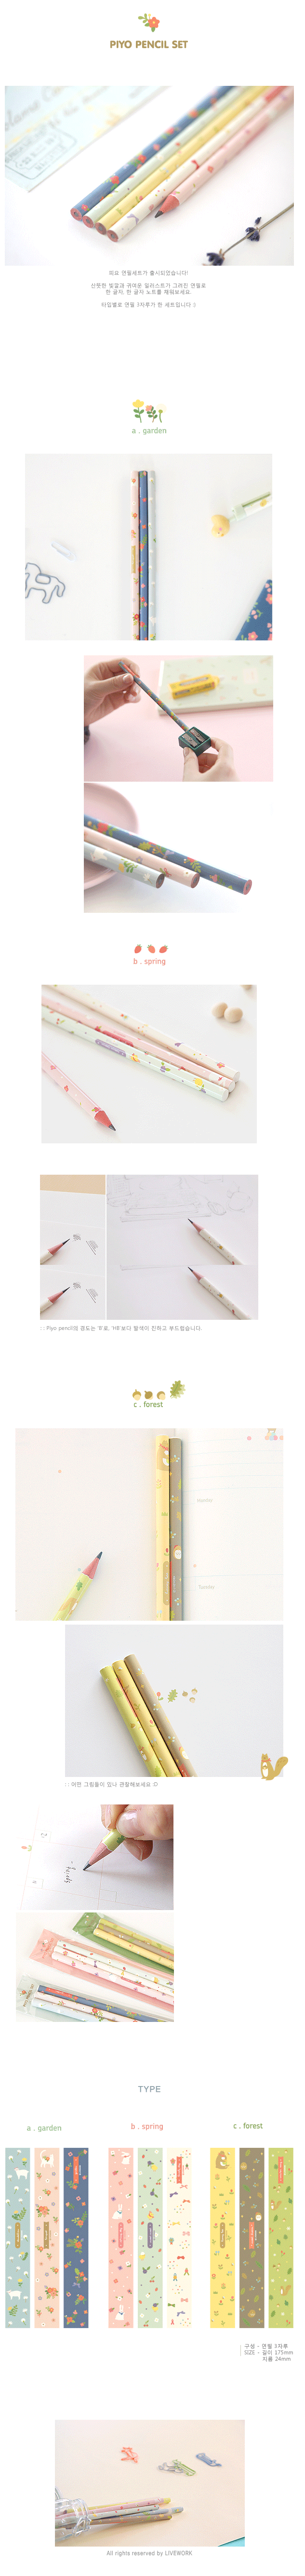 Livework forest Piyo pencils [stationery sets, stationary sets, stationery presents]